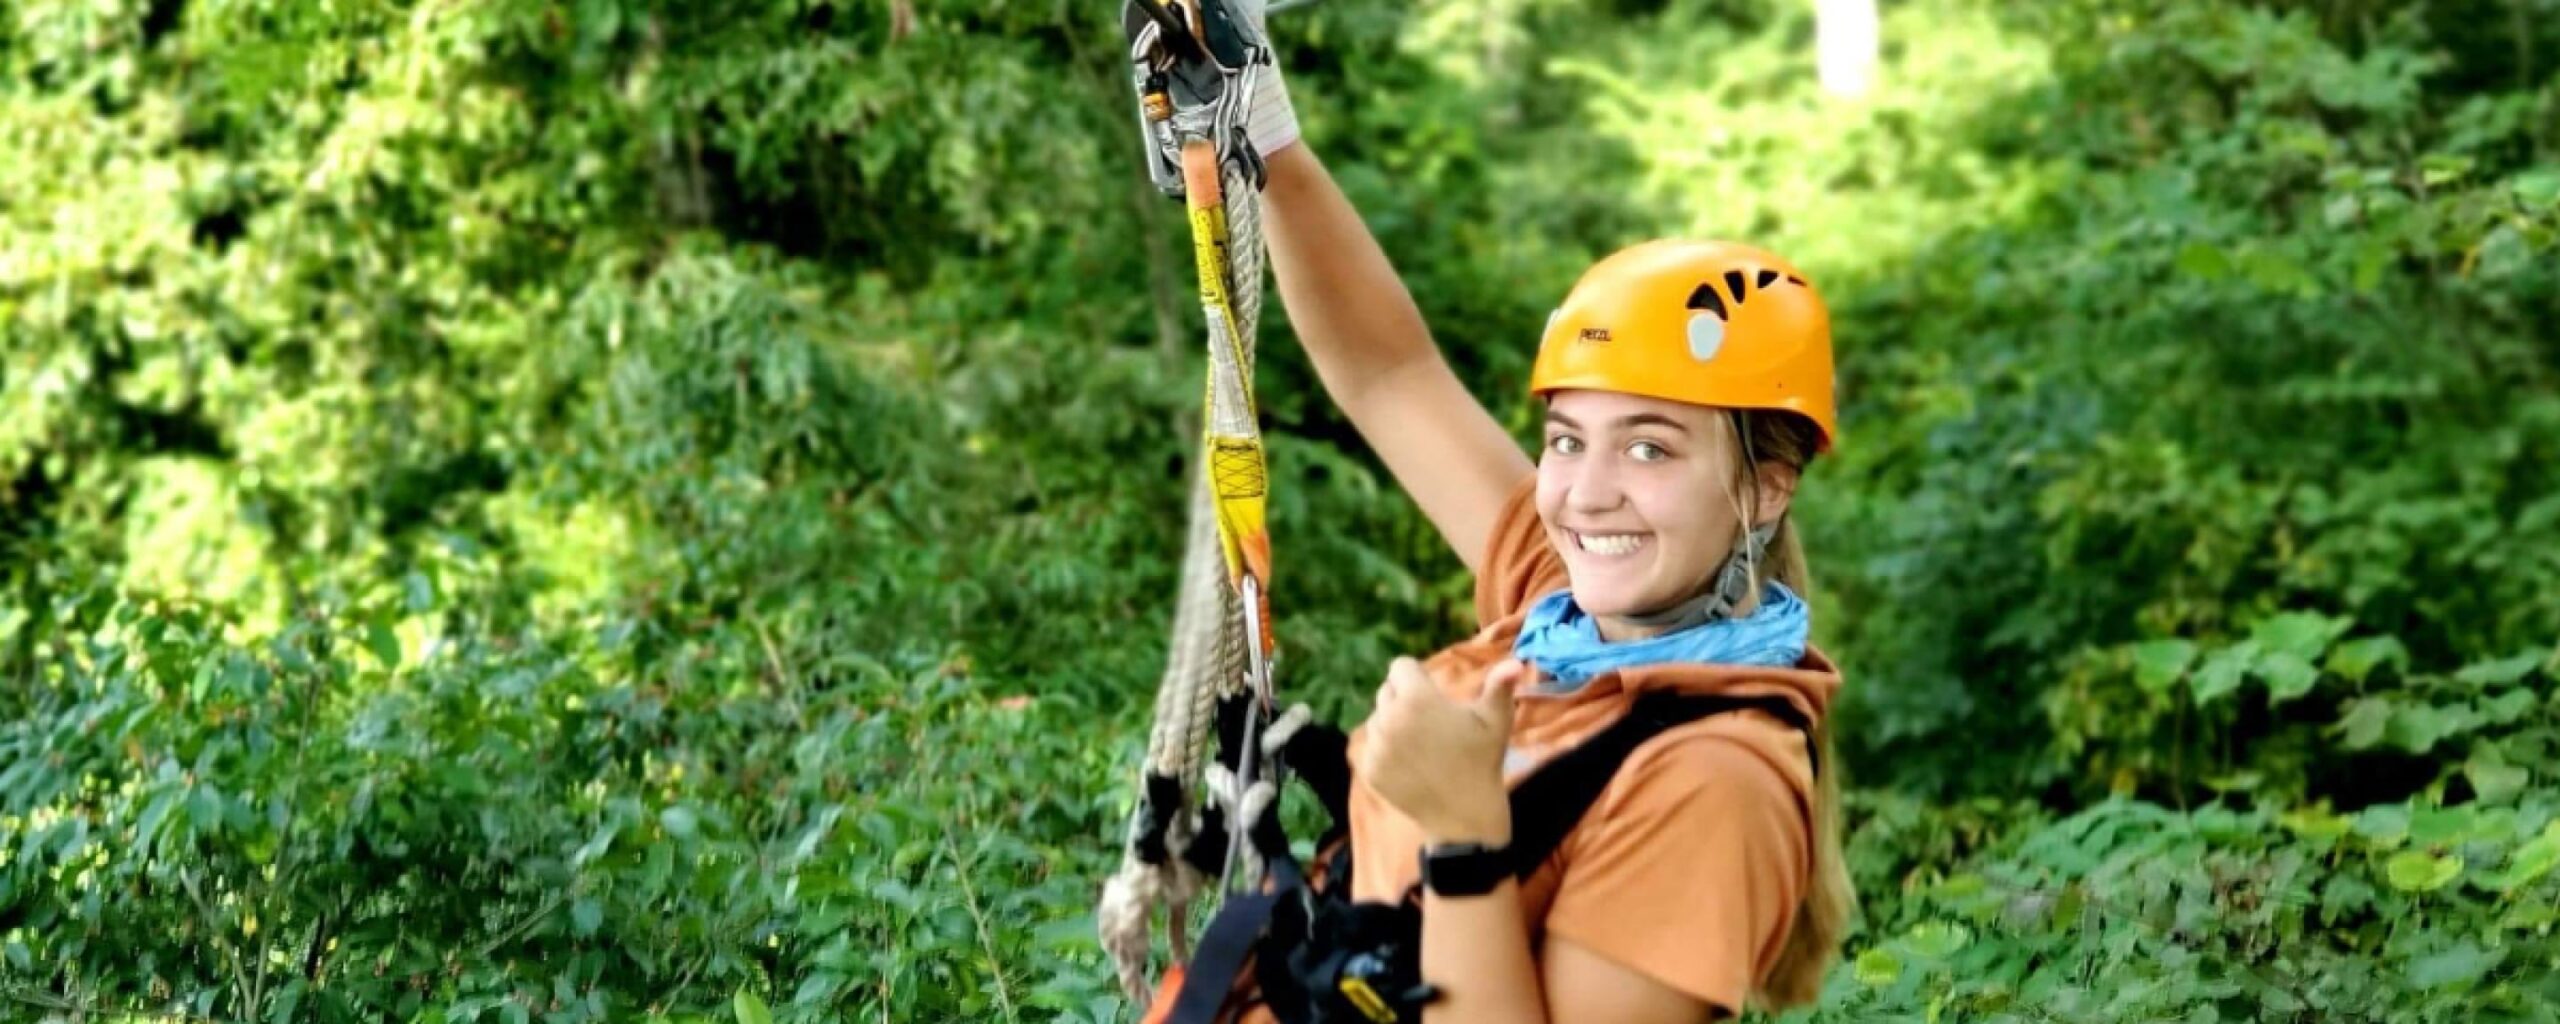 women on aerial adventure park